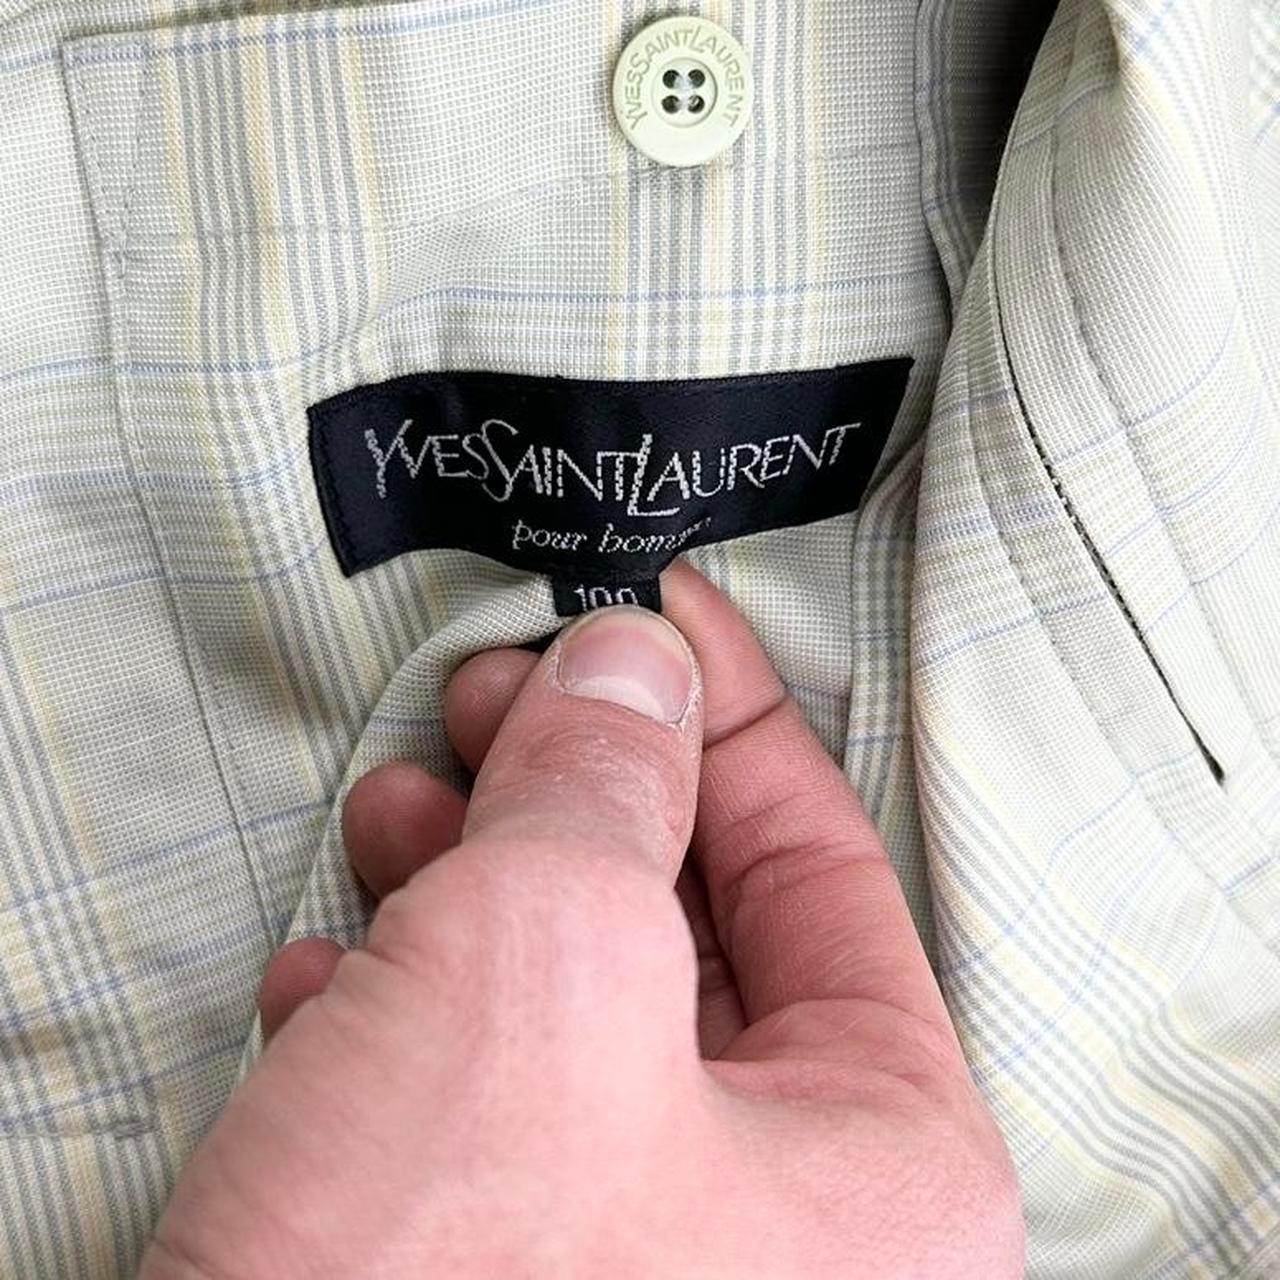 Vintage YSL Yves Saint Laurent checkered Harrington jacket size L - Known Source